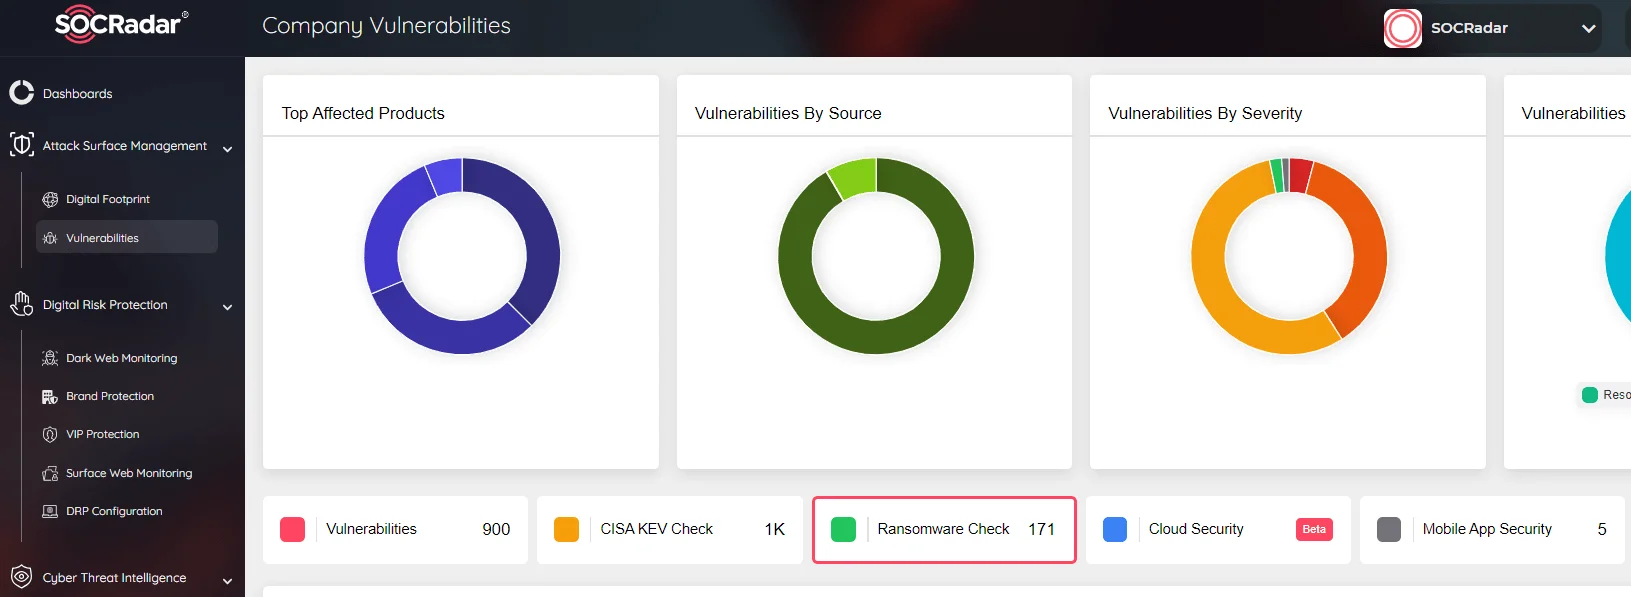 SOCRadar Company Vulnerabilities, Ransomware Check feature